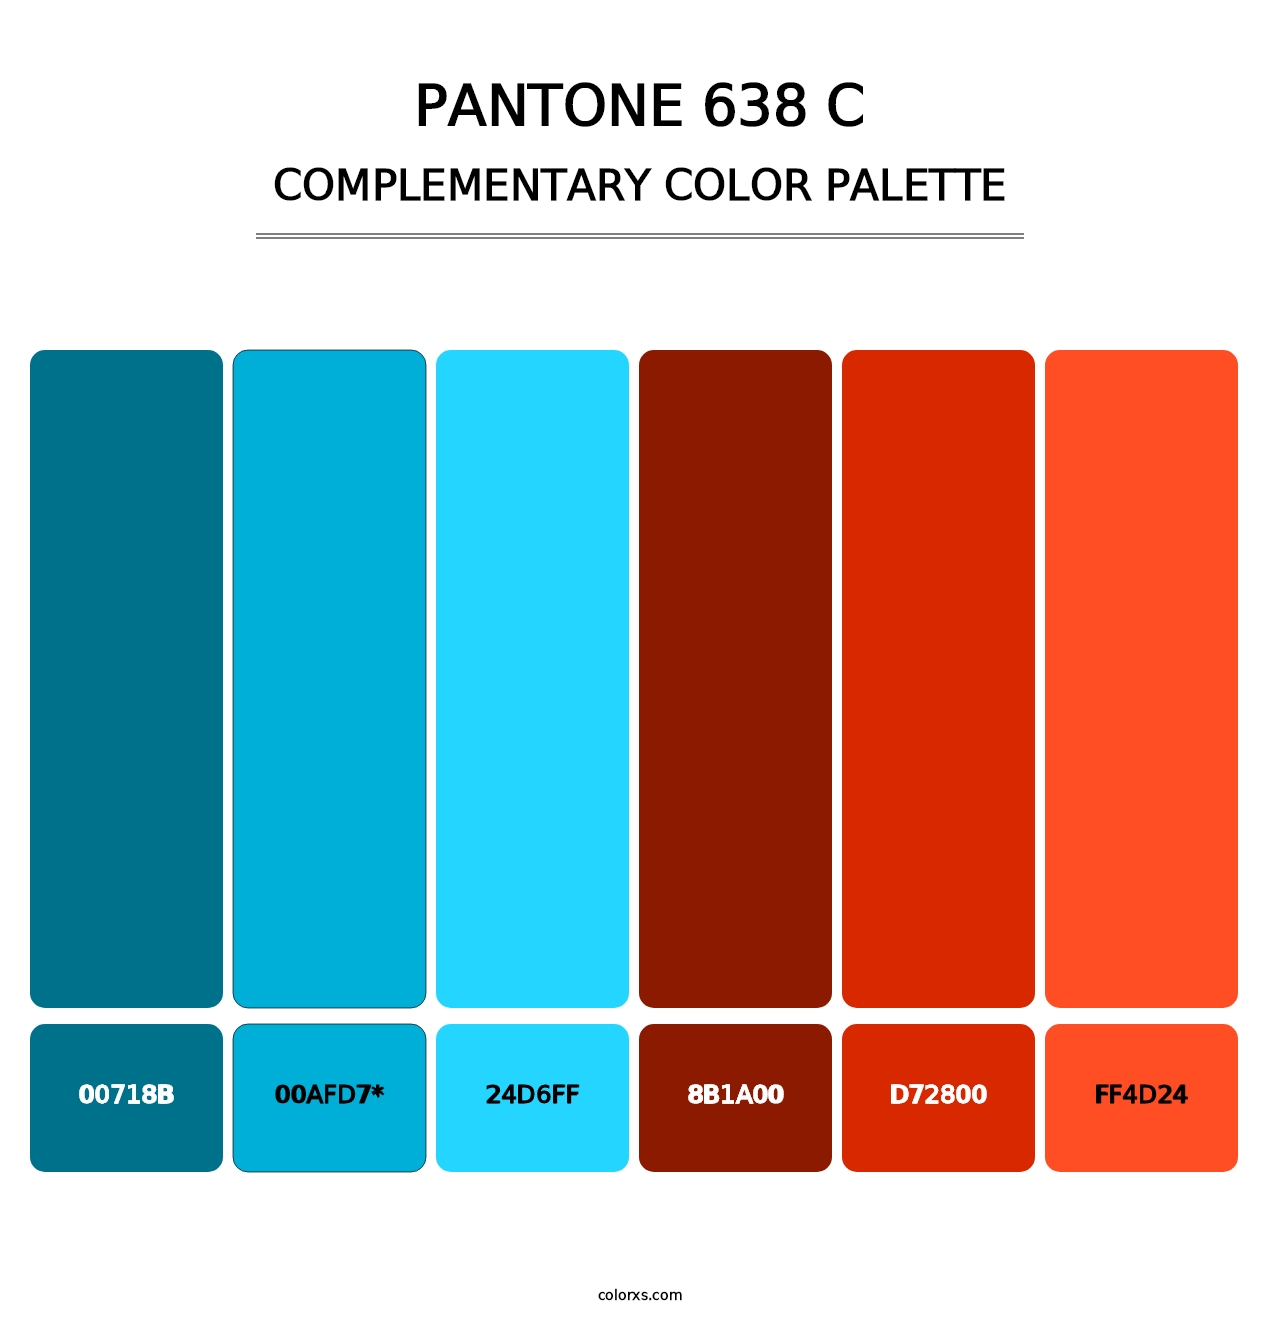 PANTONE 638 C - Complementary Color Palette